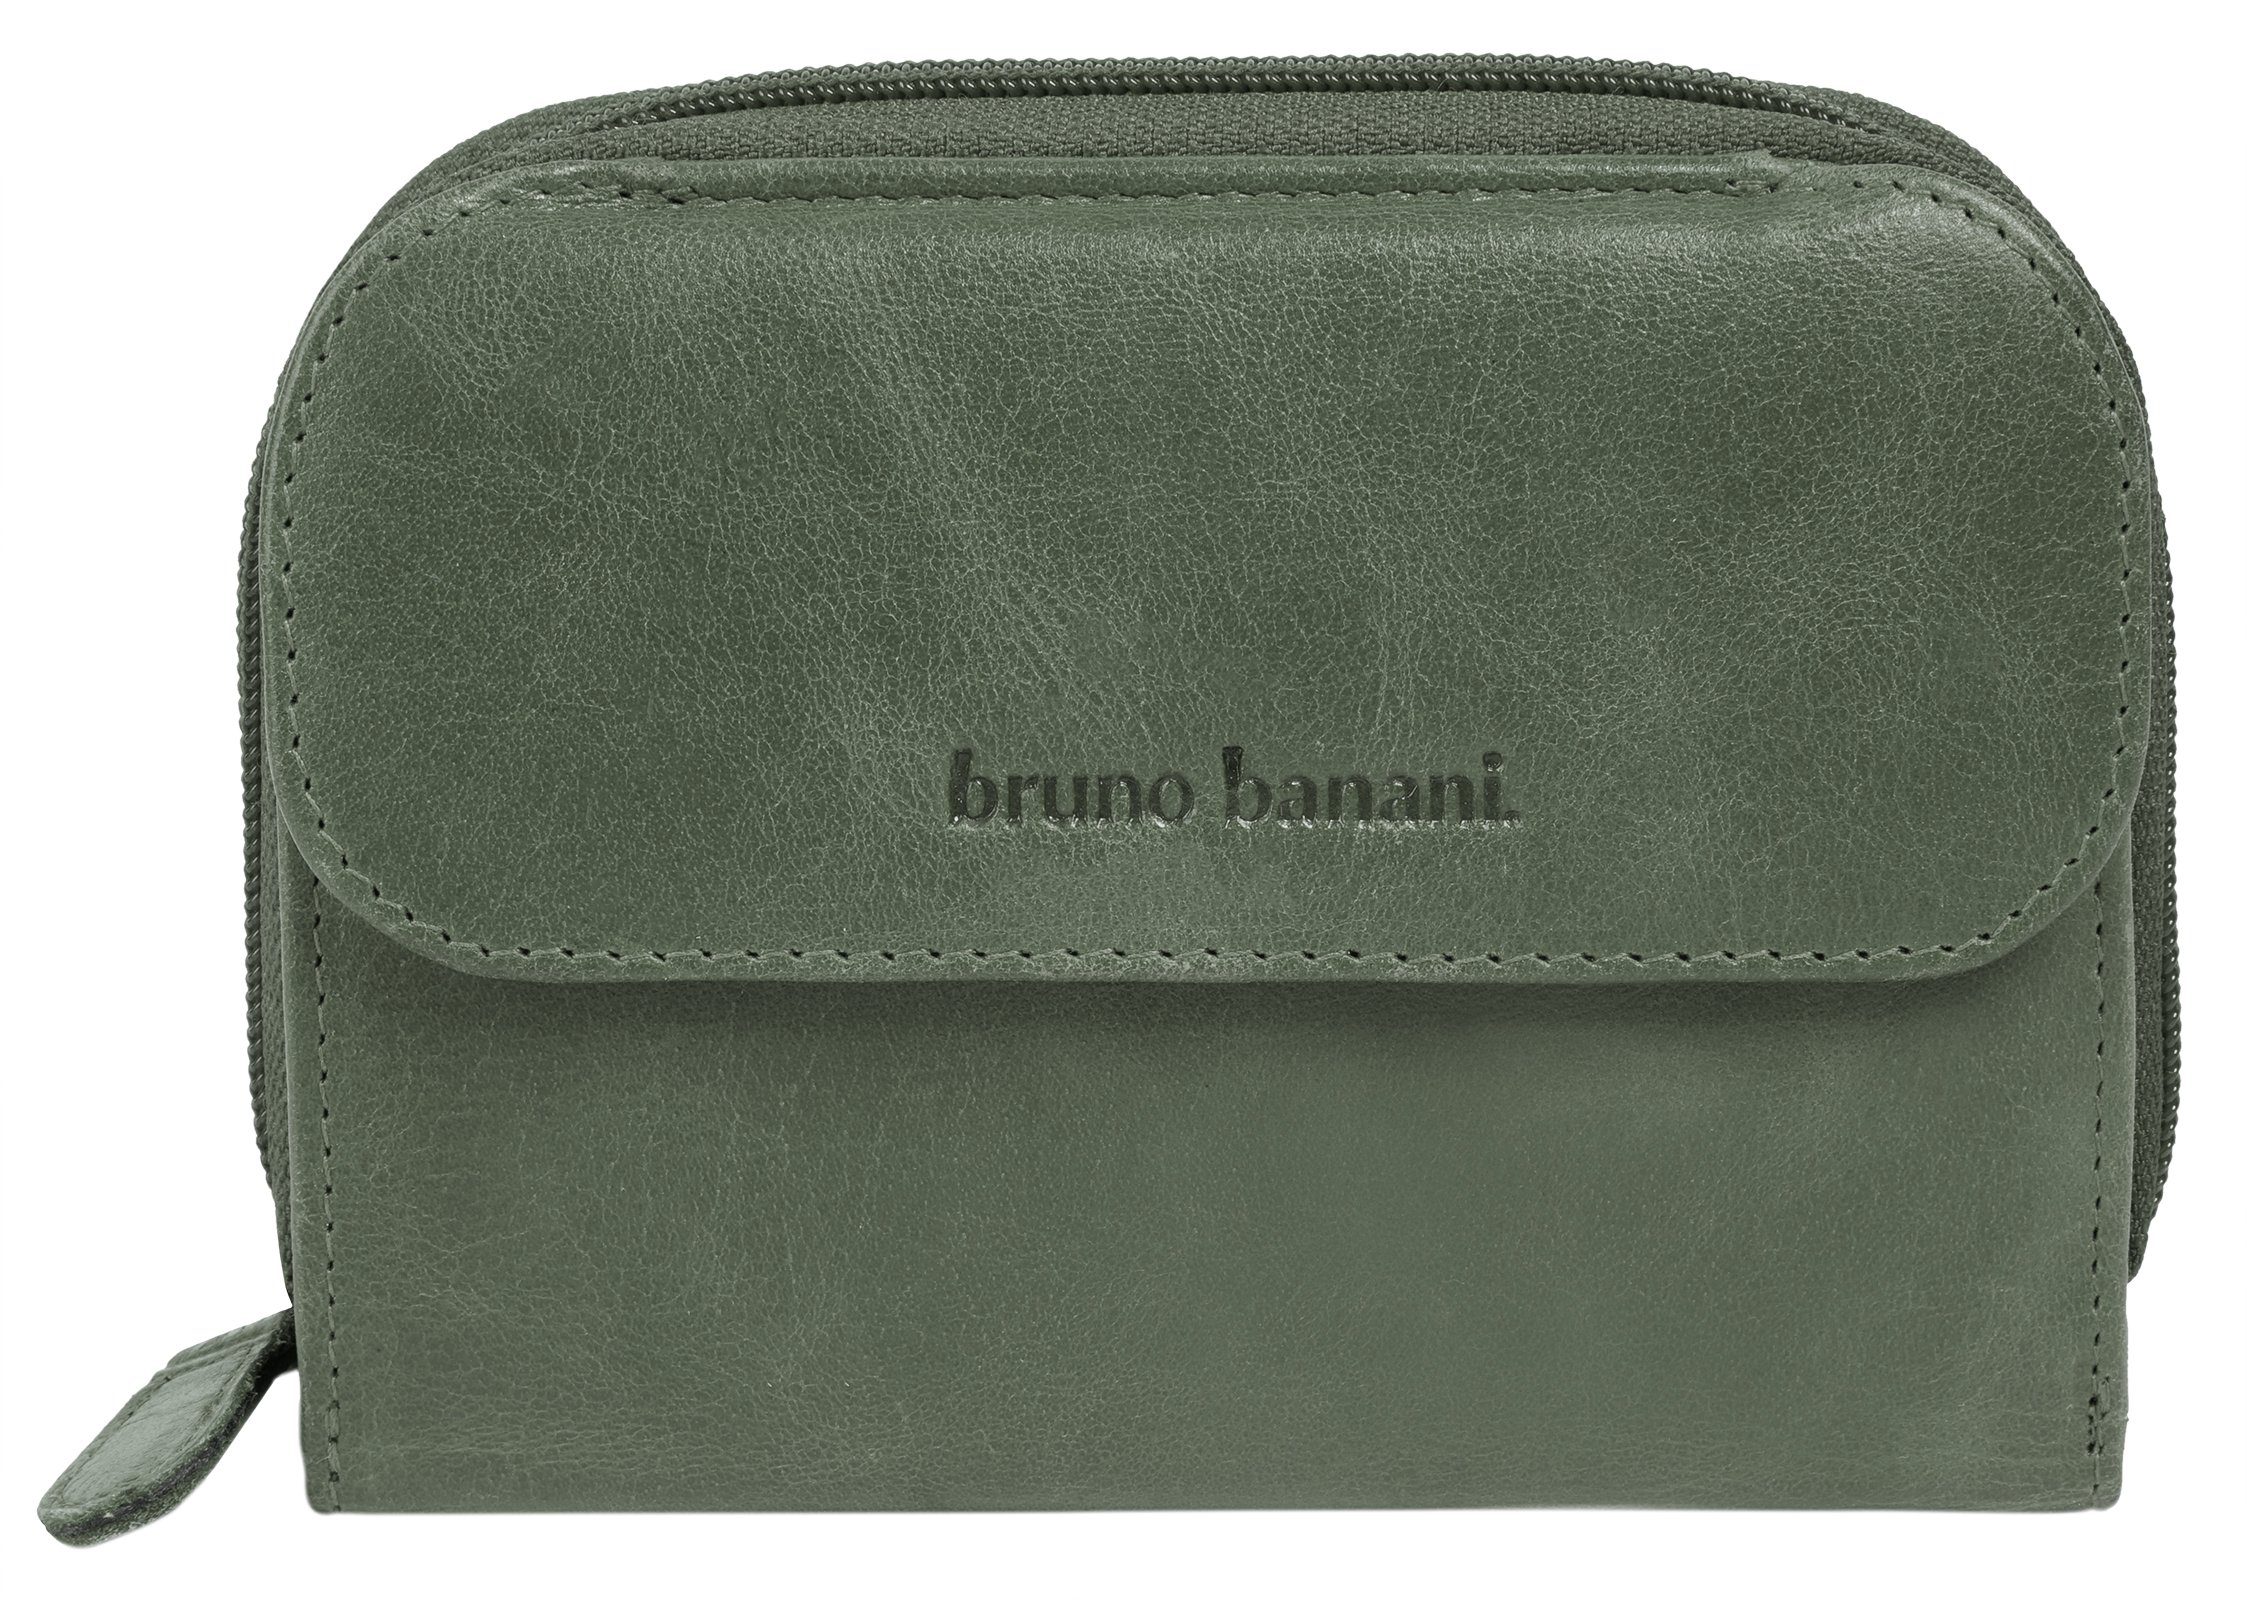 Bruno Banani Geldbörse, echt Leder grün